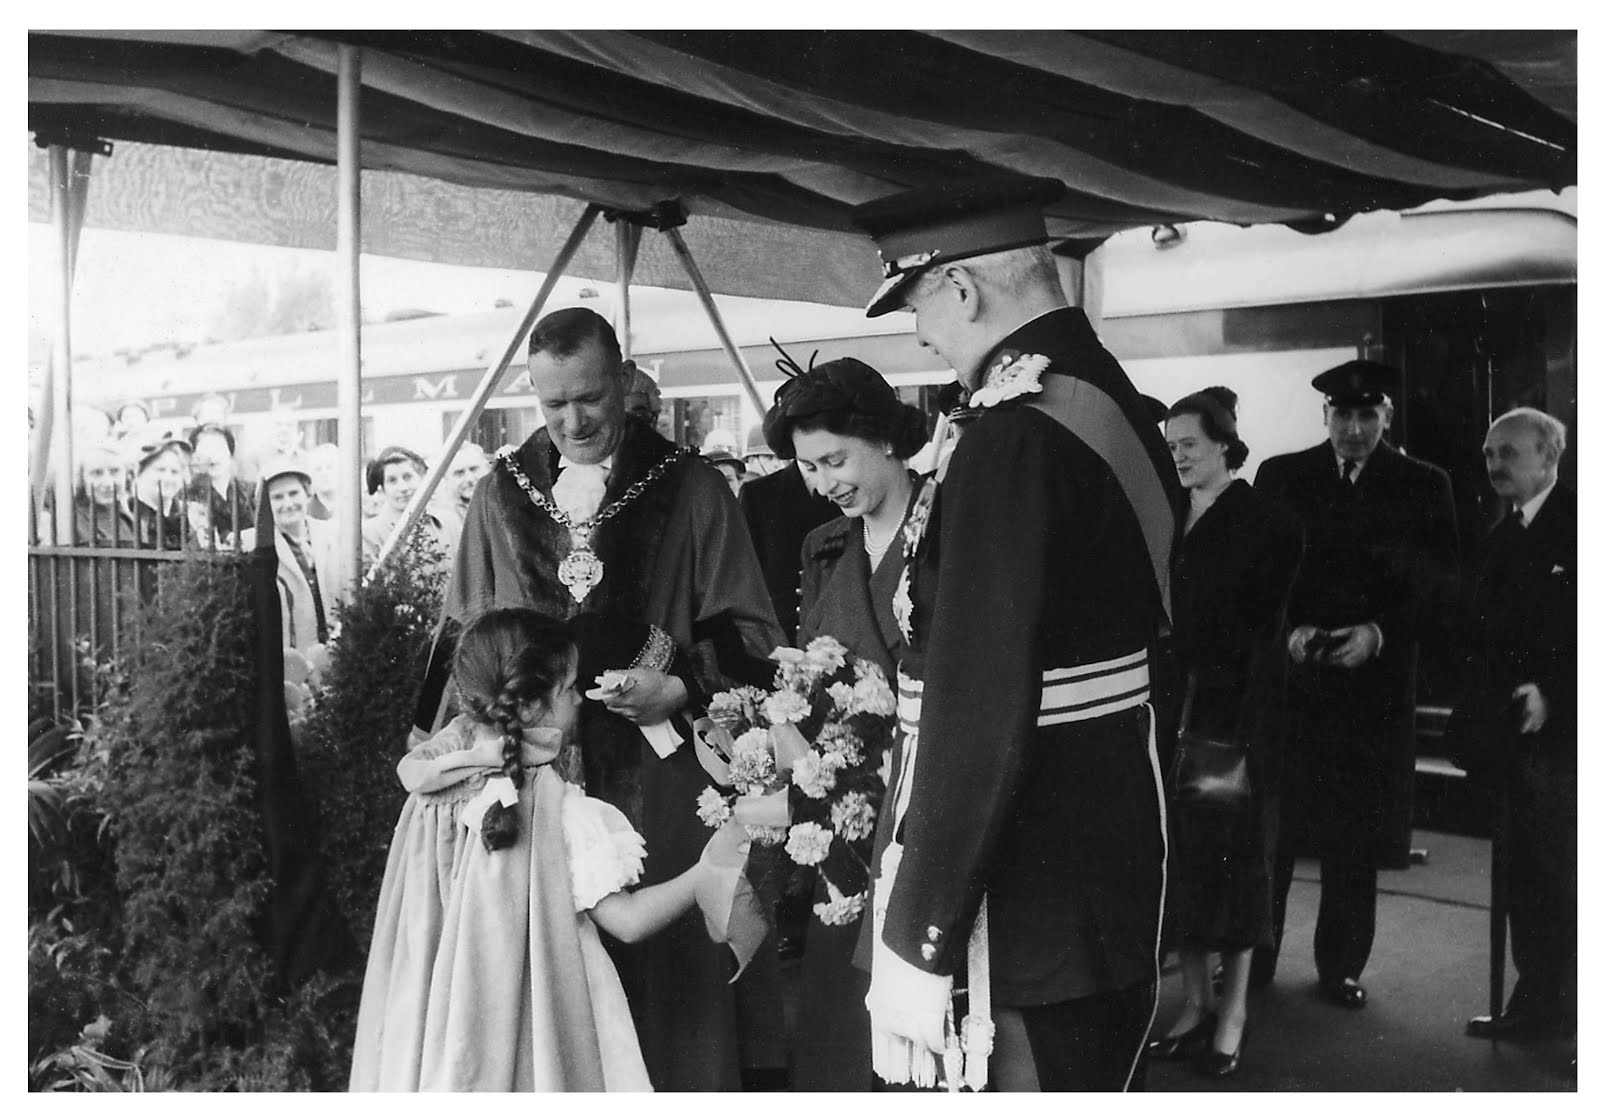 The Queen at Fort Brockhurst 1952